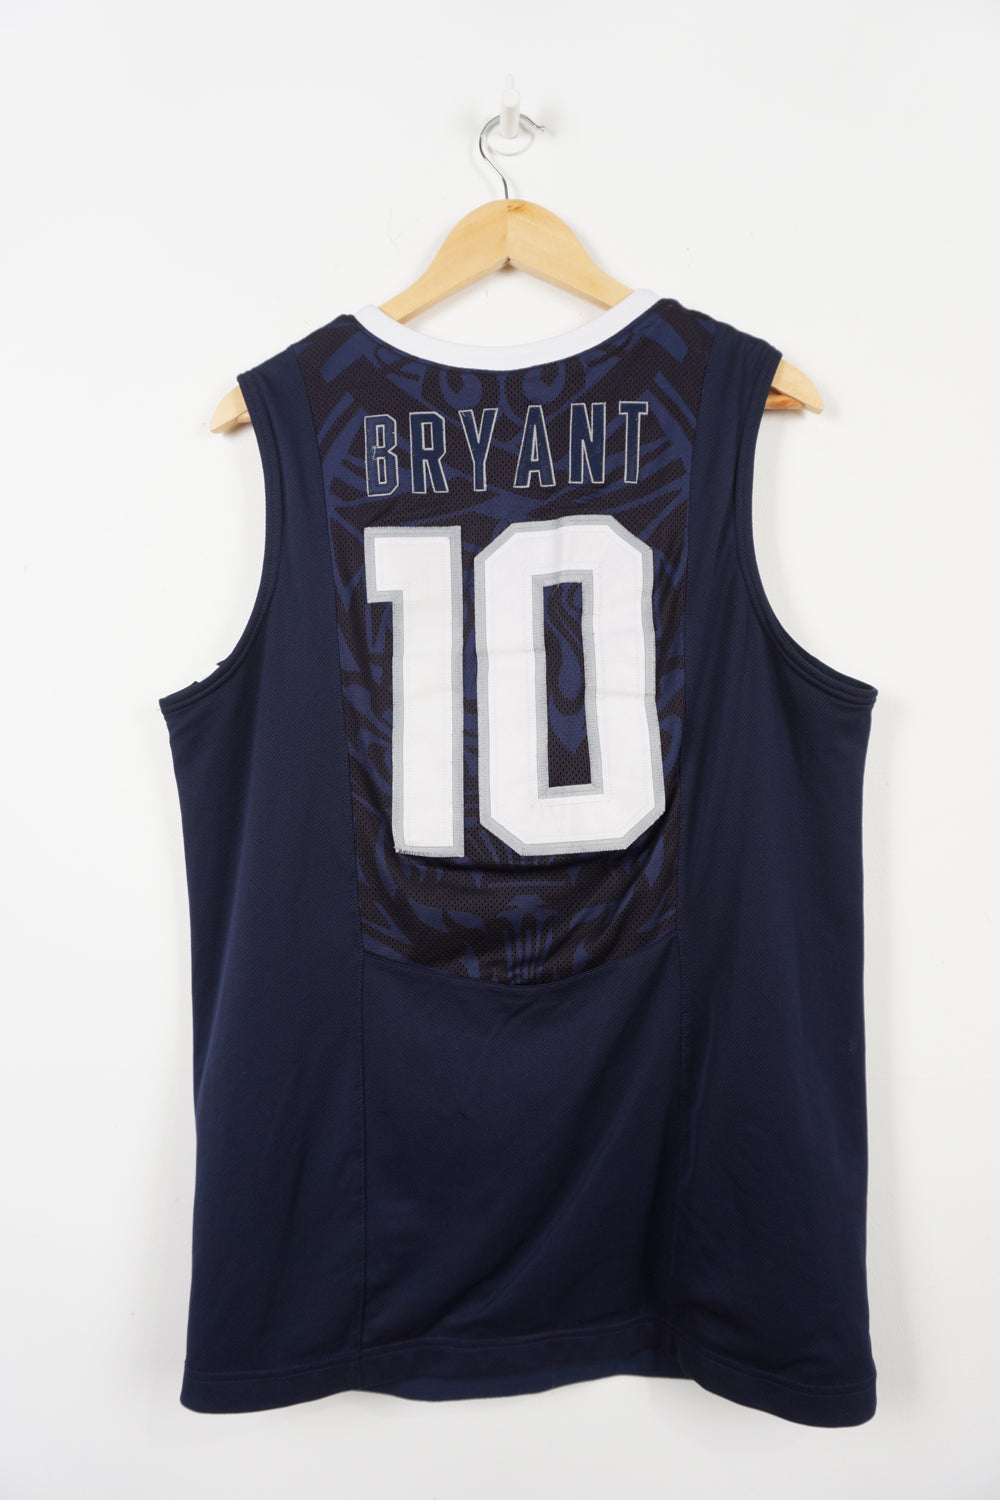 Authentic Nike Kobe Bryant Team USA Olympics NBA Jersey, Men's